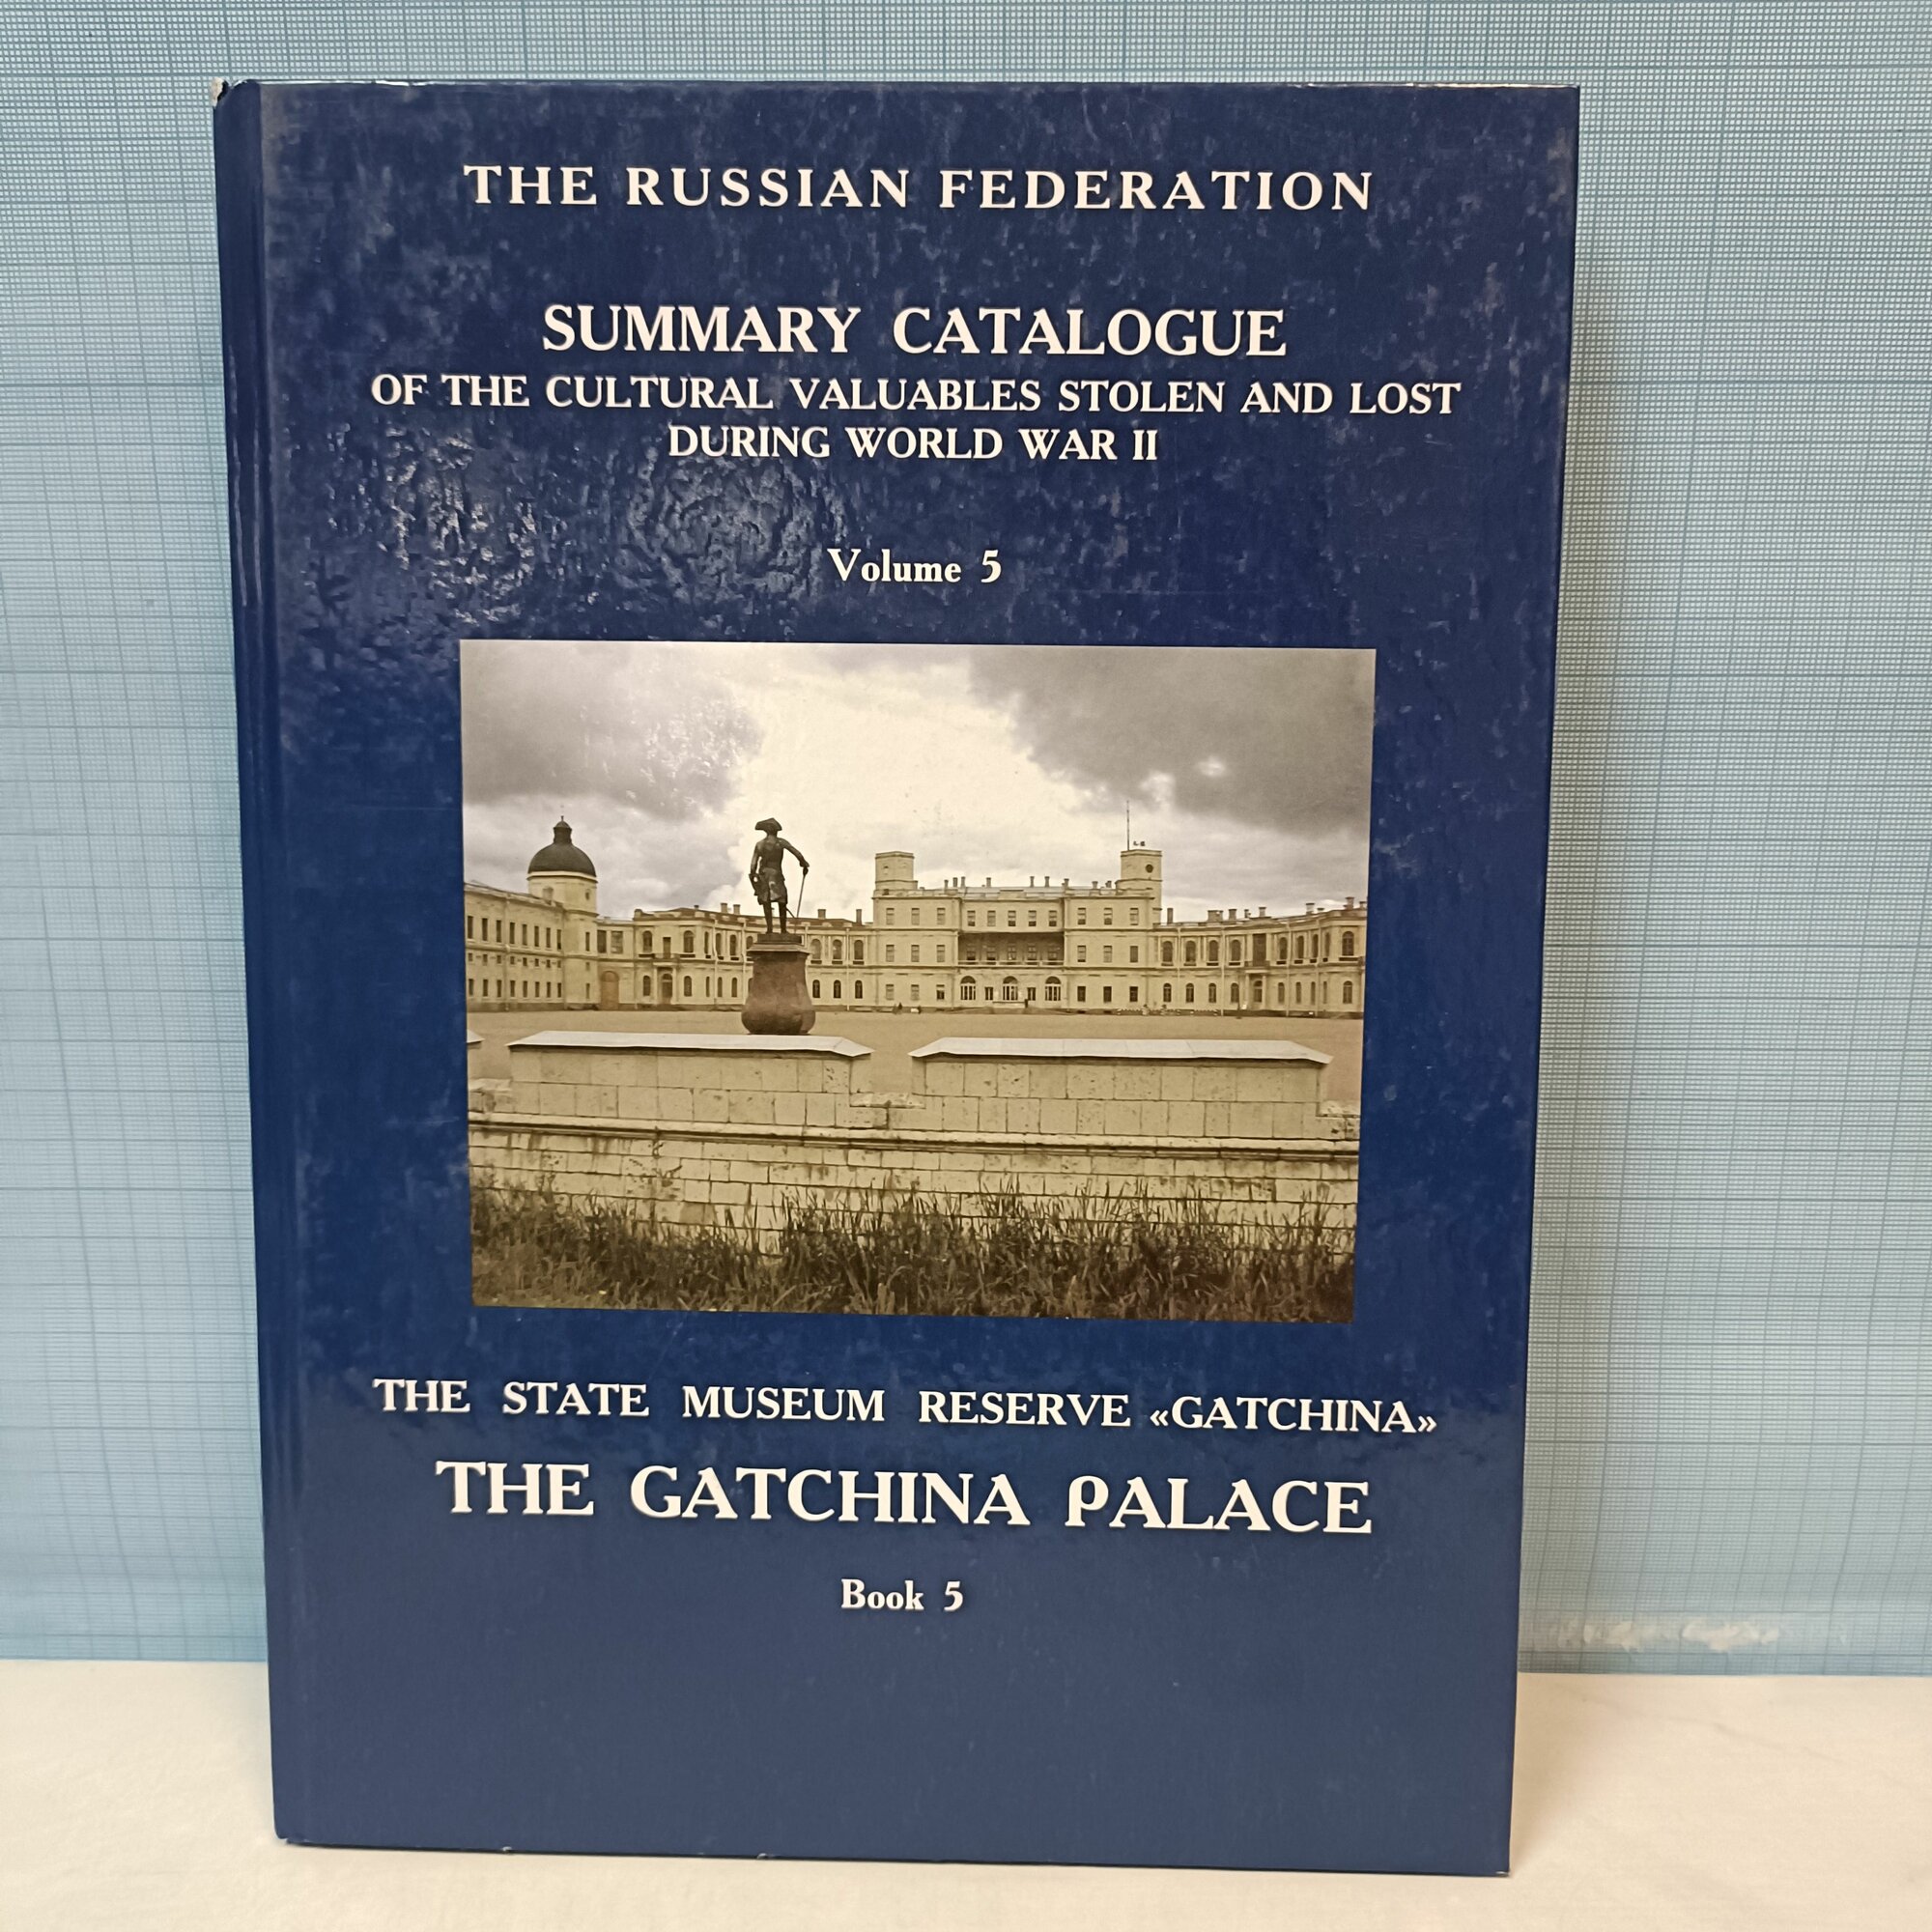 SUMMARY CATALOGUE. VOL.5. THE GATCHINA PALACE. Book 5